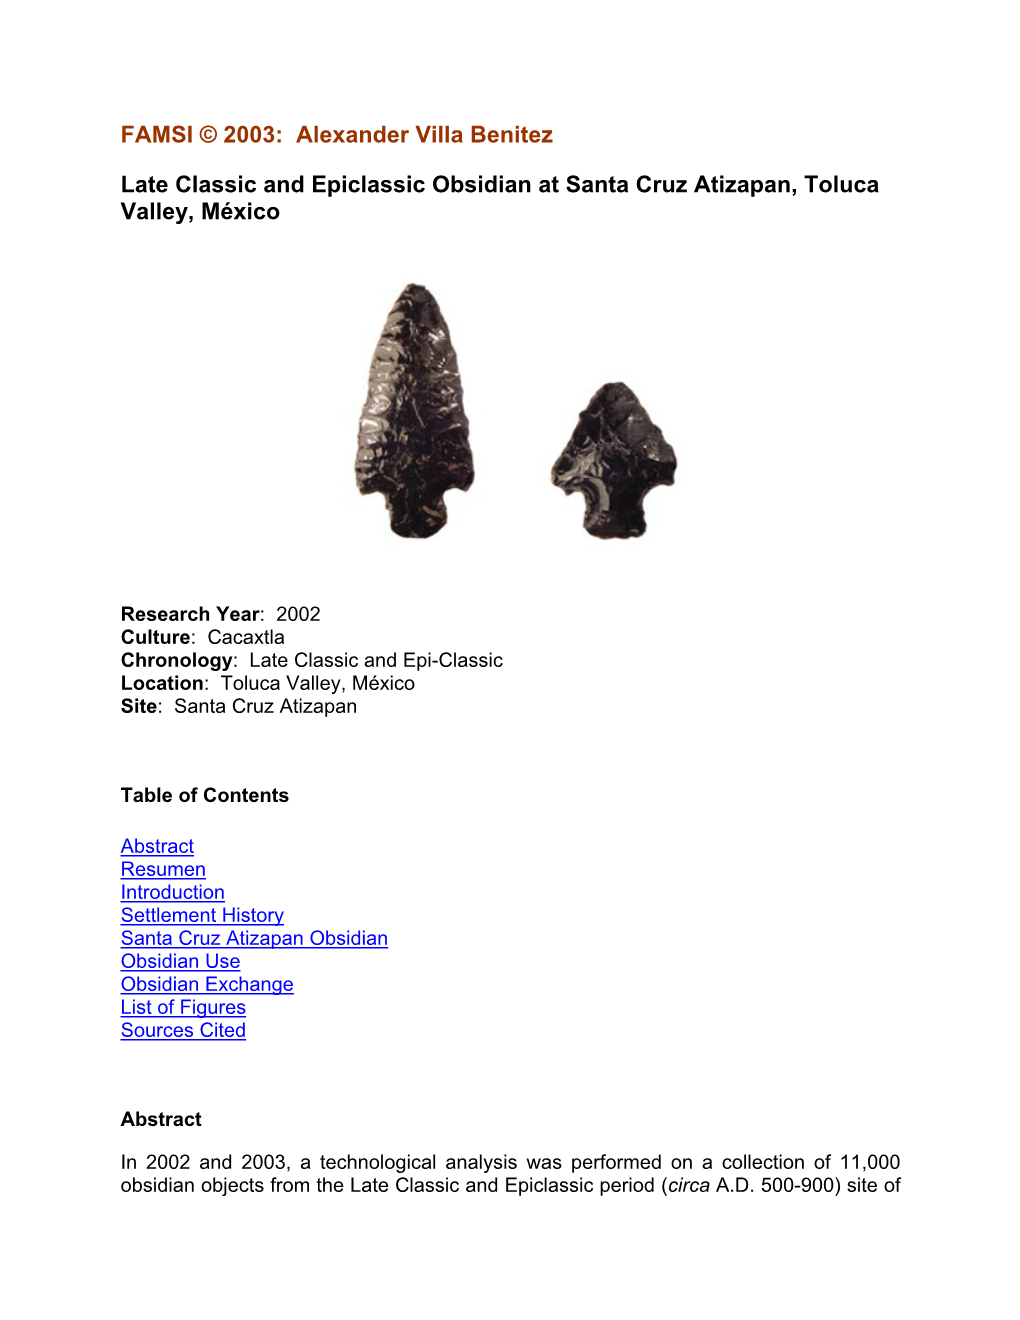 Late Classic and Epiclassic Obsidian at Santa Cruz Atizapan, Toluca Valley, México